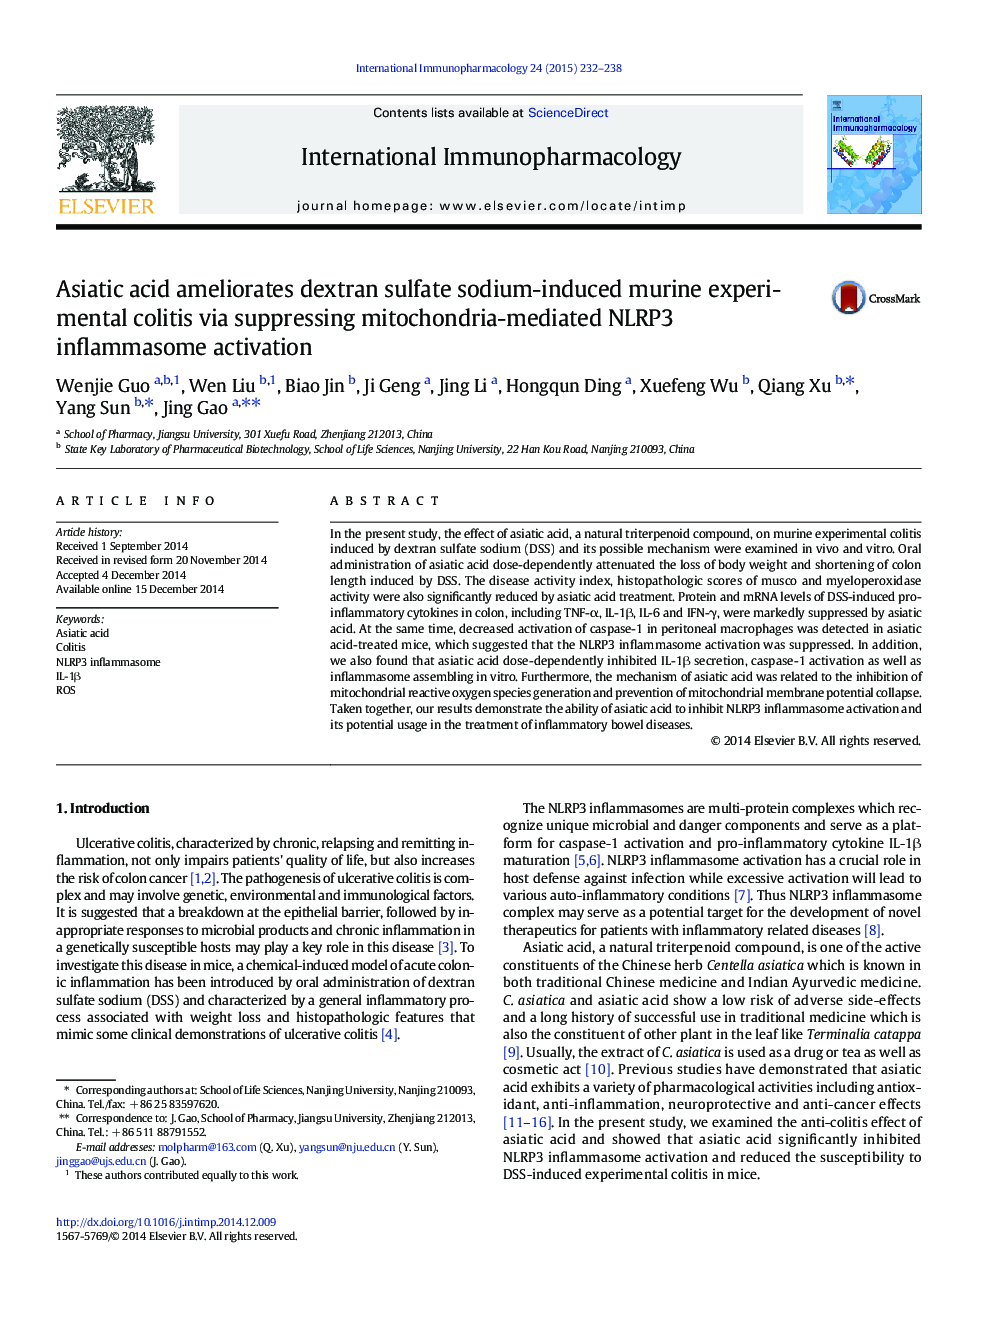 Asiatic acid ameliorates dextran sulfate sodium-induced murine experimental colitis via suppressing mitochondria-mediated NLRP3 inflammasome activation